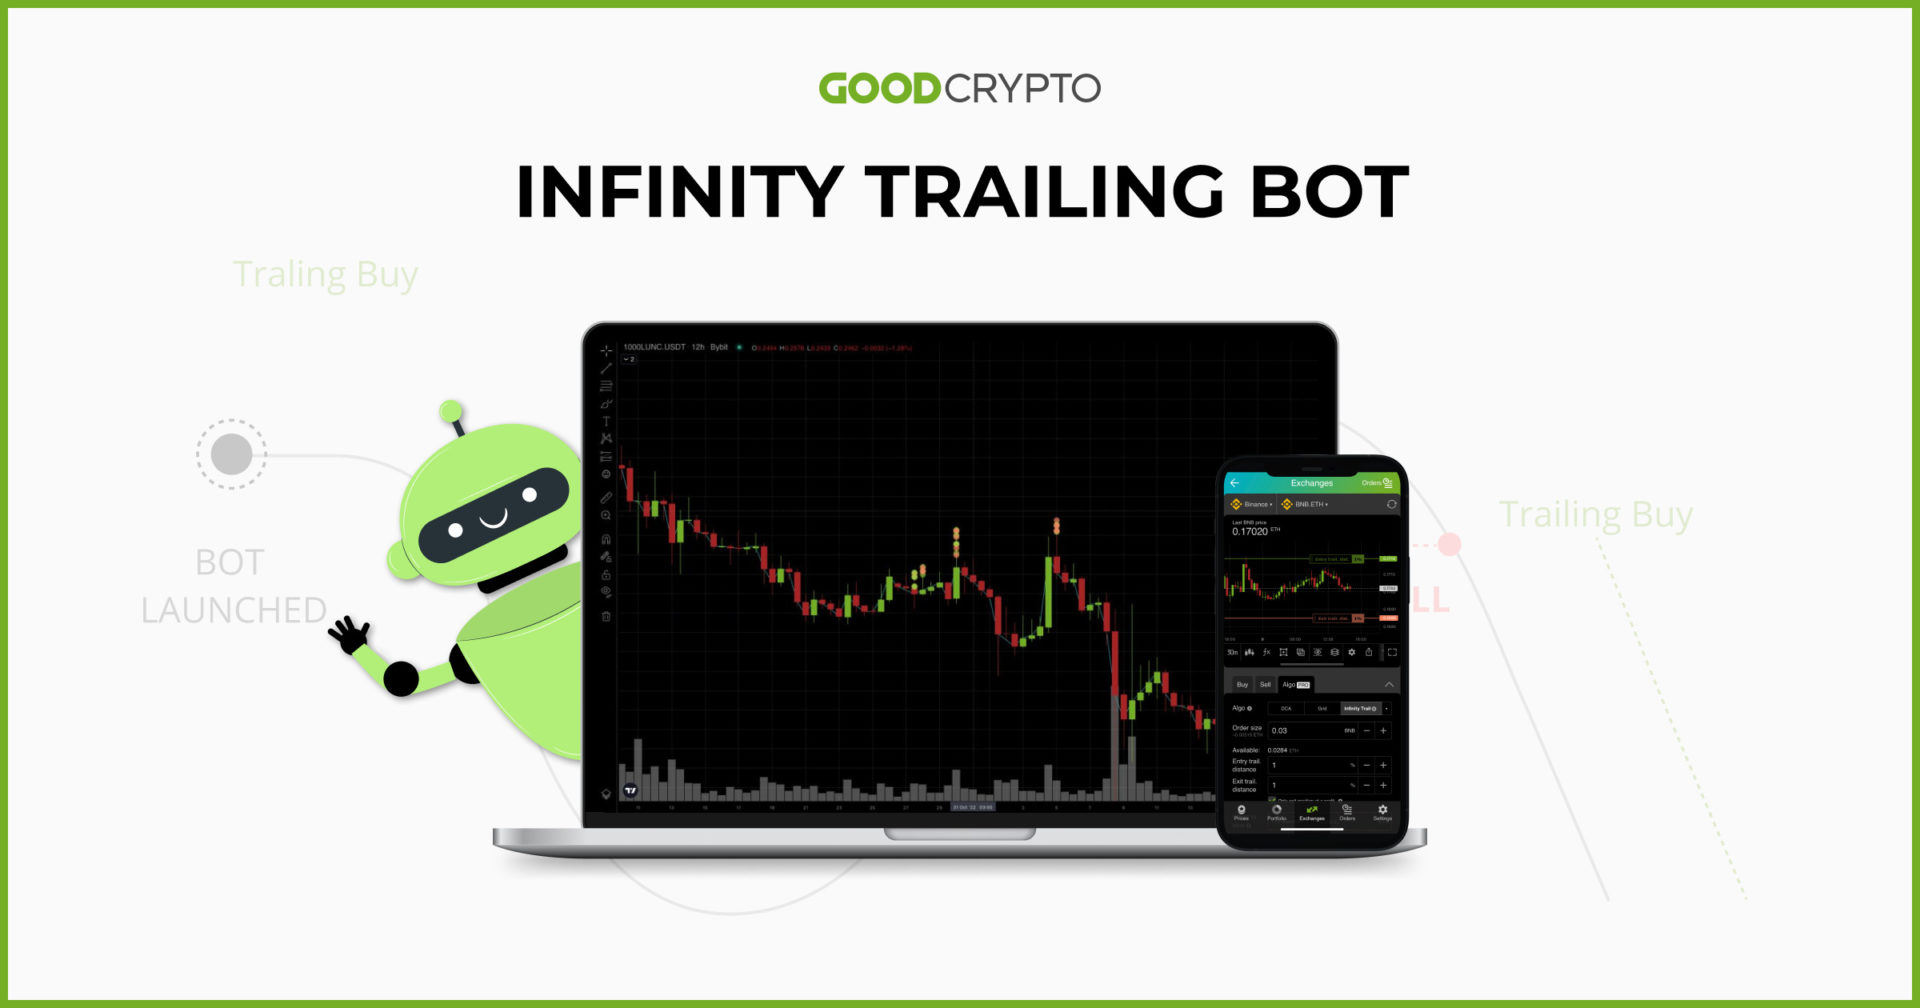 3Commas Review Platform for Crypto Trading Bots